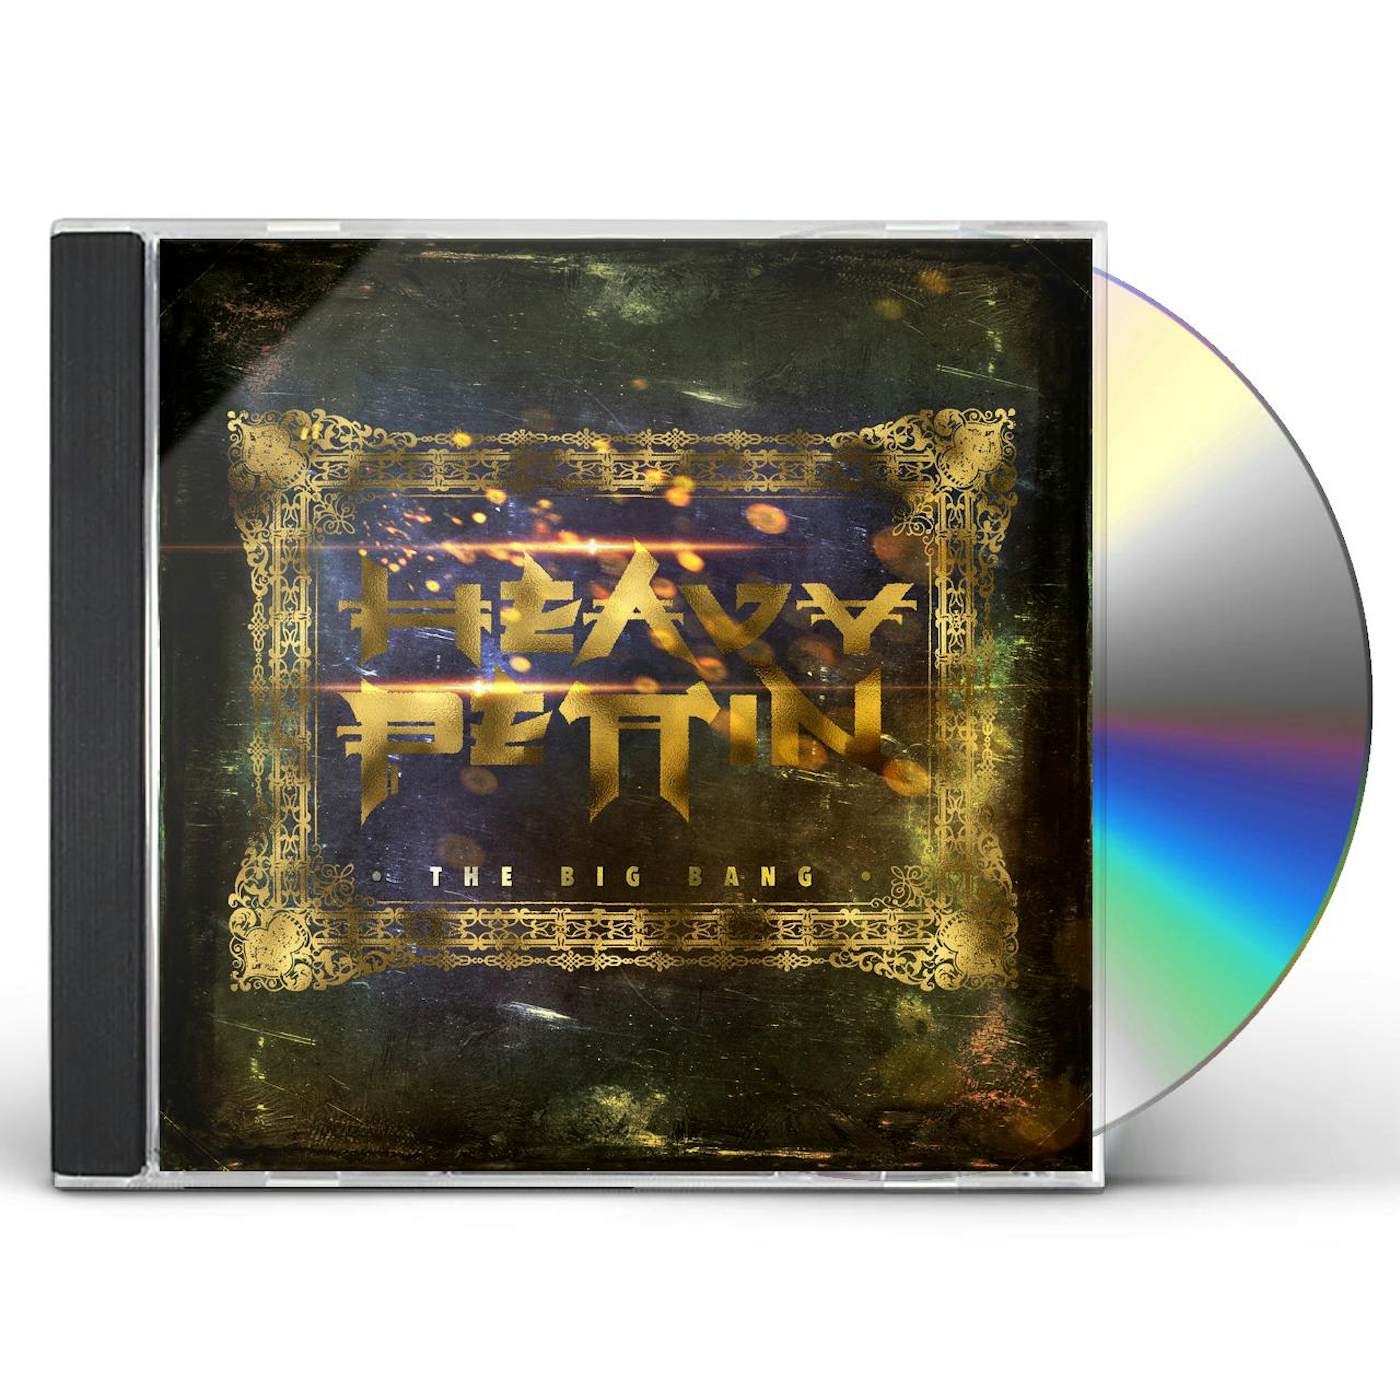 Heavy Pettin Big bang CD